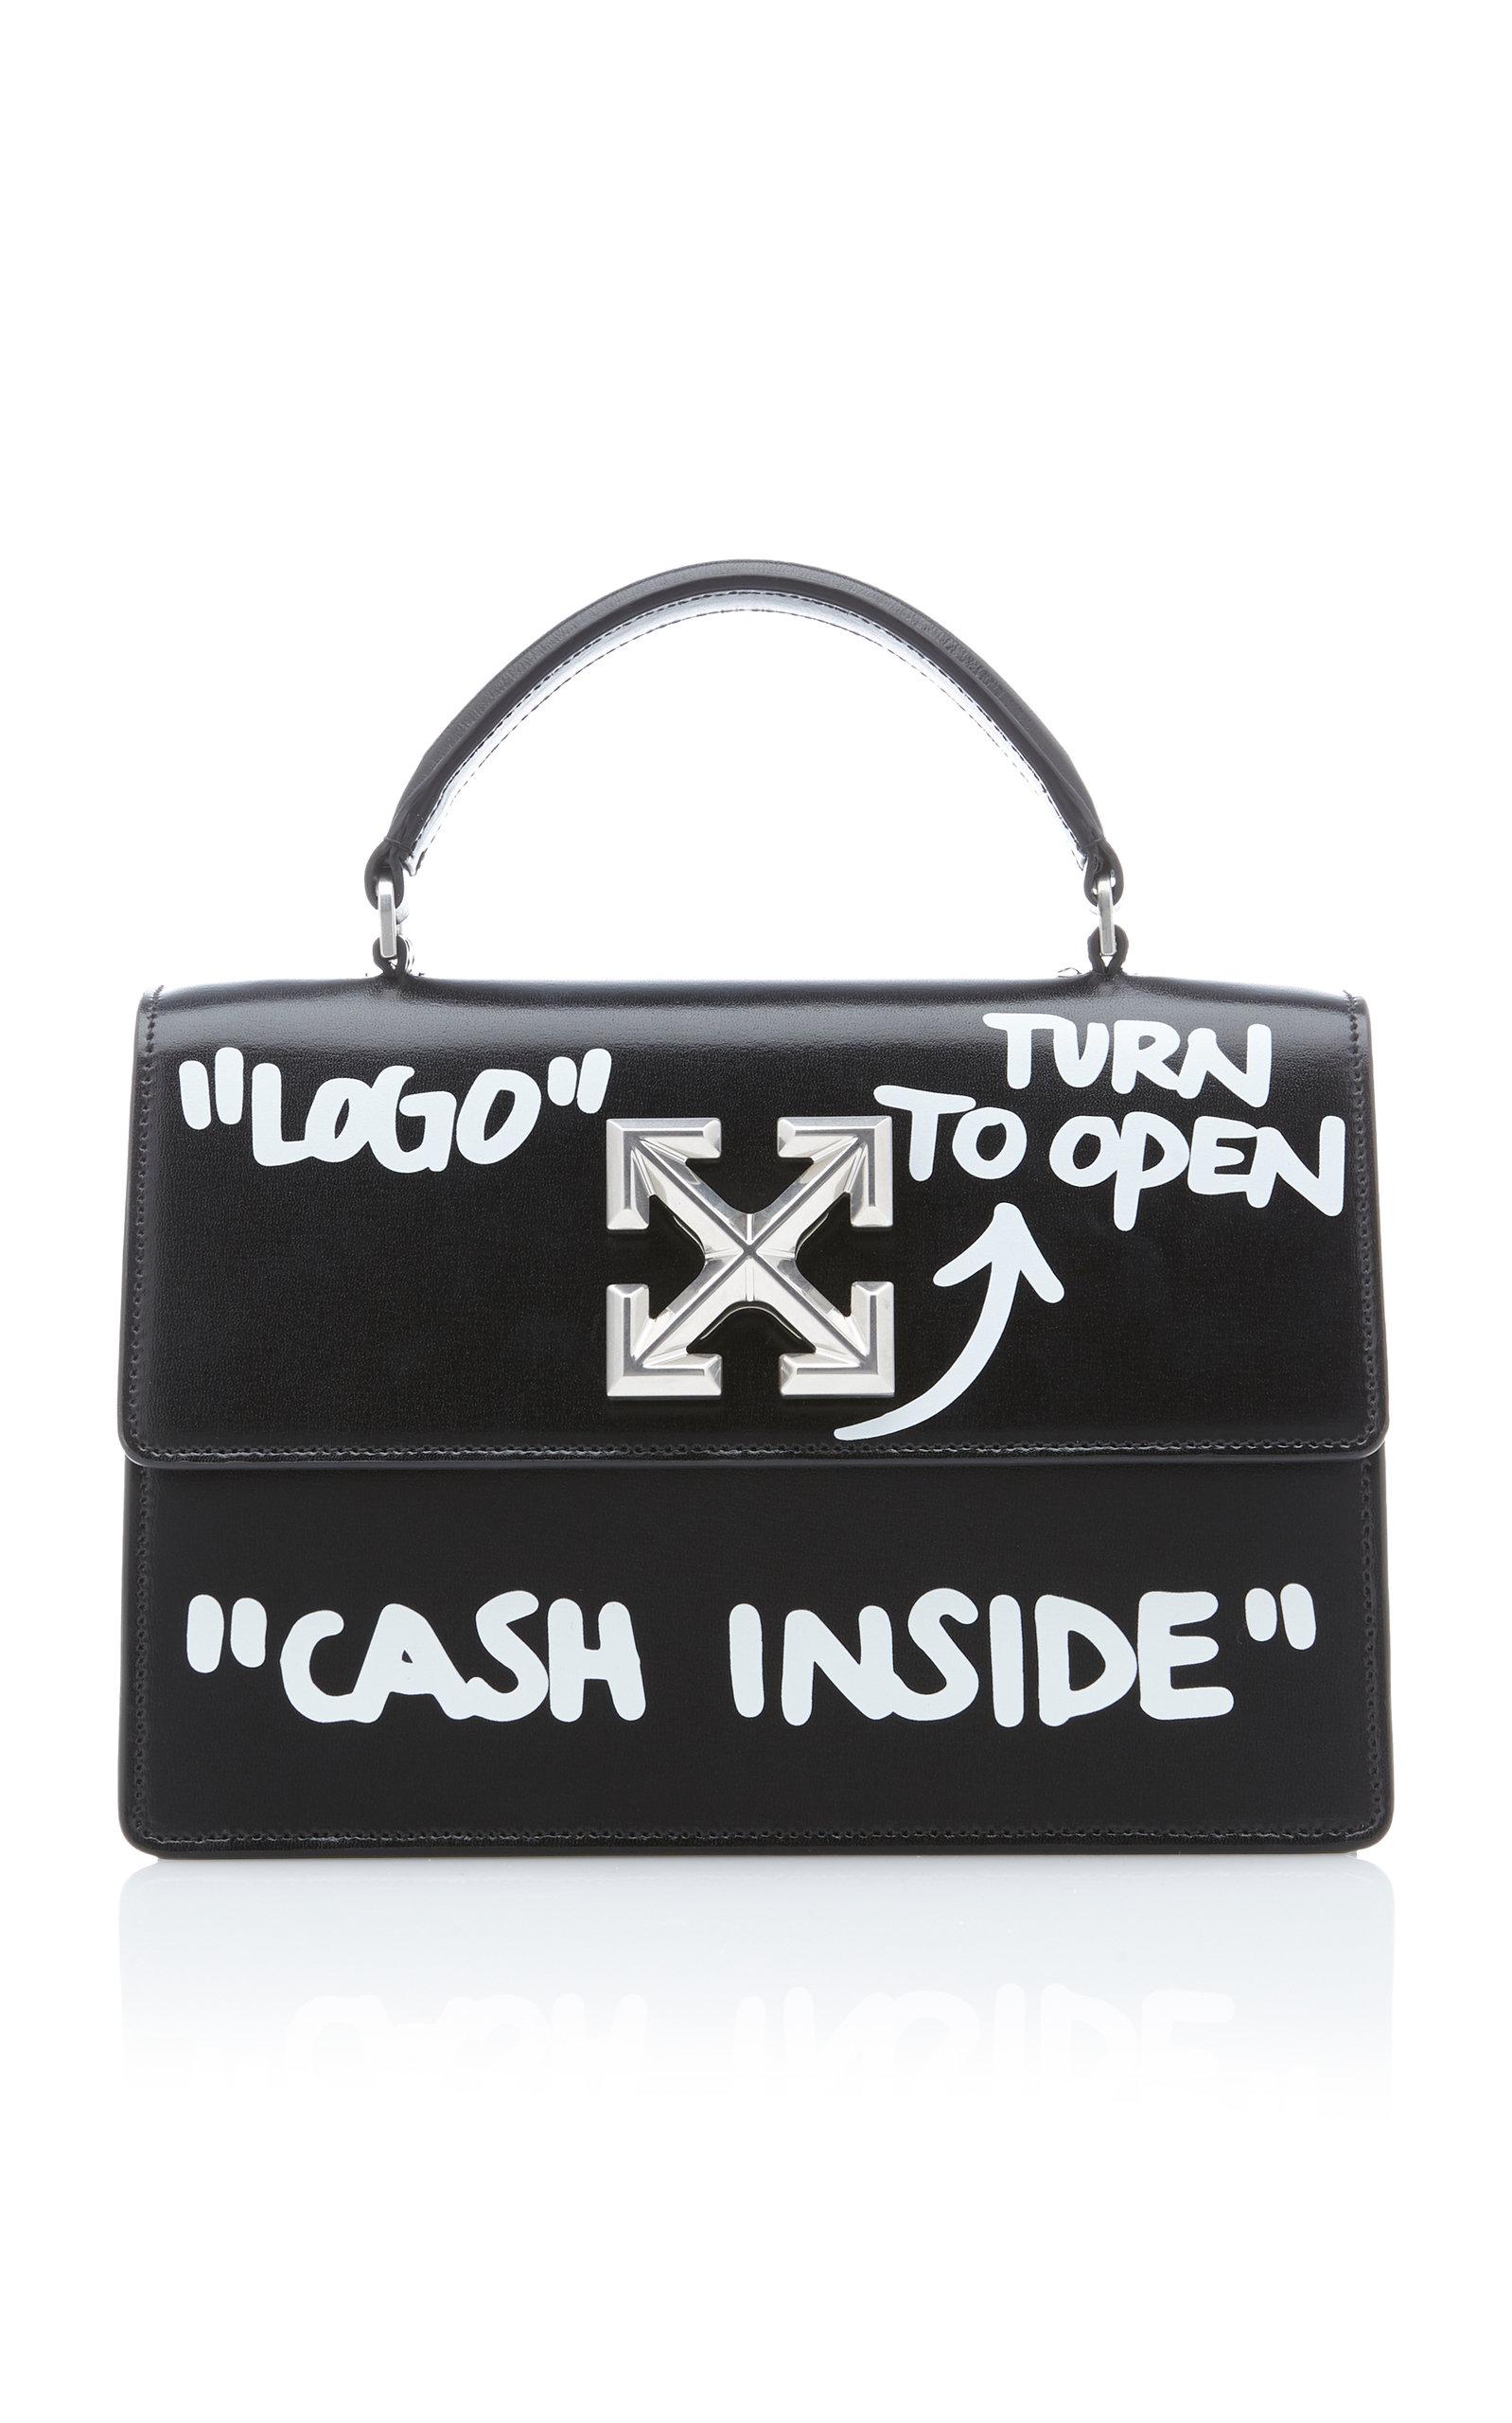 Off-White c/o Virgil Abloh Itney 1.4 Cash Inside Bag in Black | Lyst